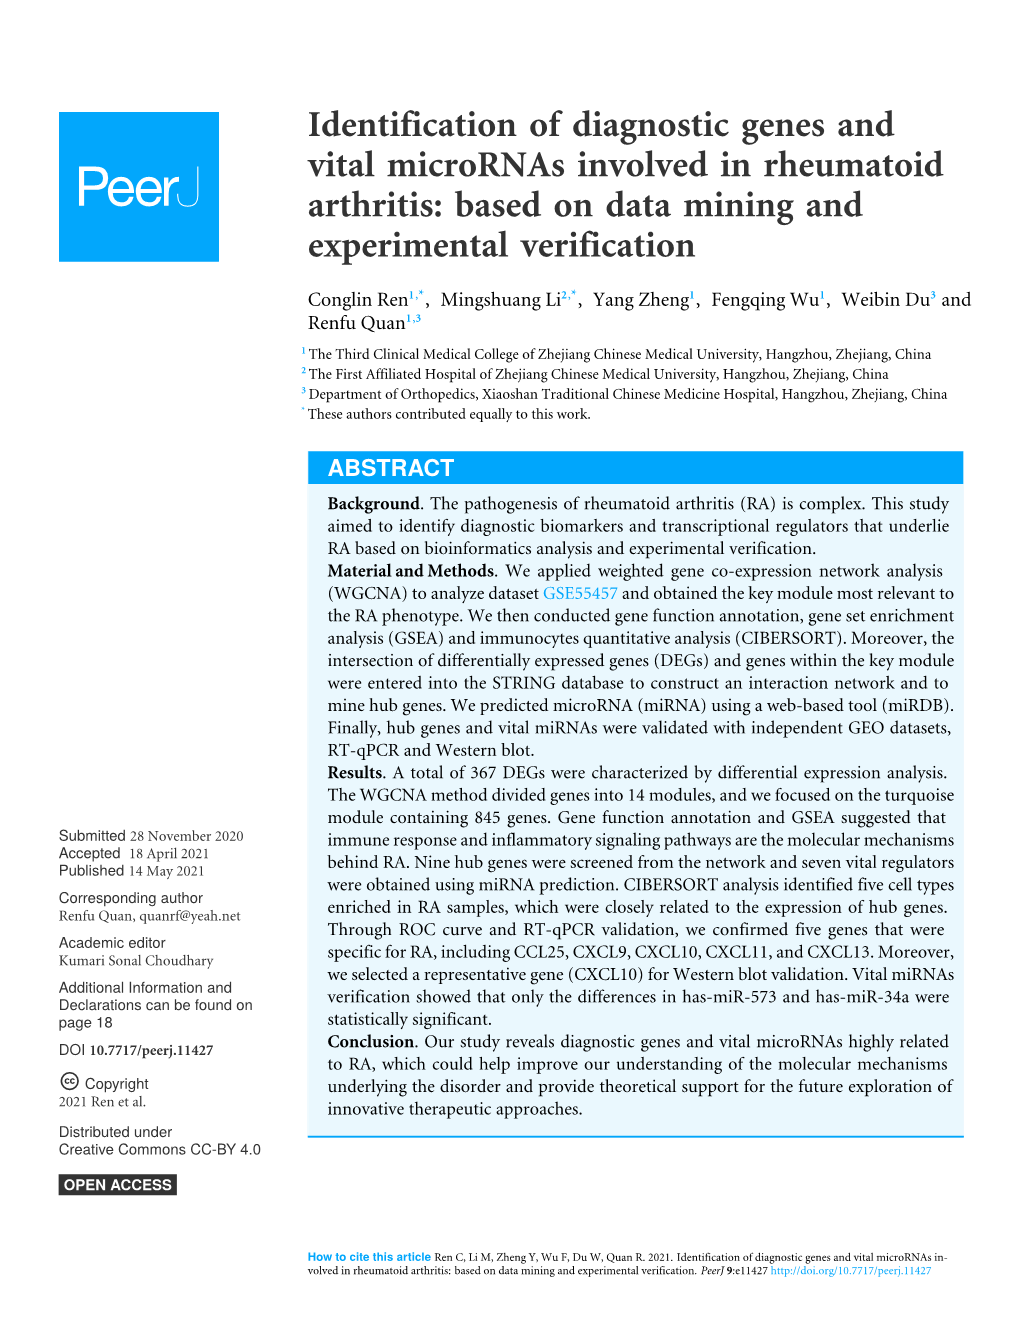 Identification of Diagnostic Genes and Vital Micrornas Involved in Rheumatoid Arthritis: Based on Data Mining and Experimental Verification